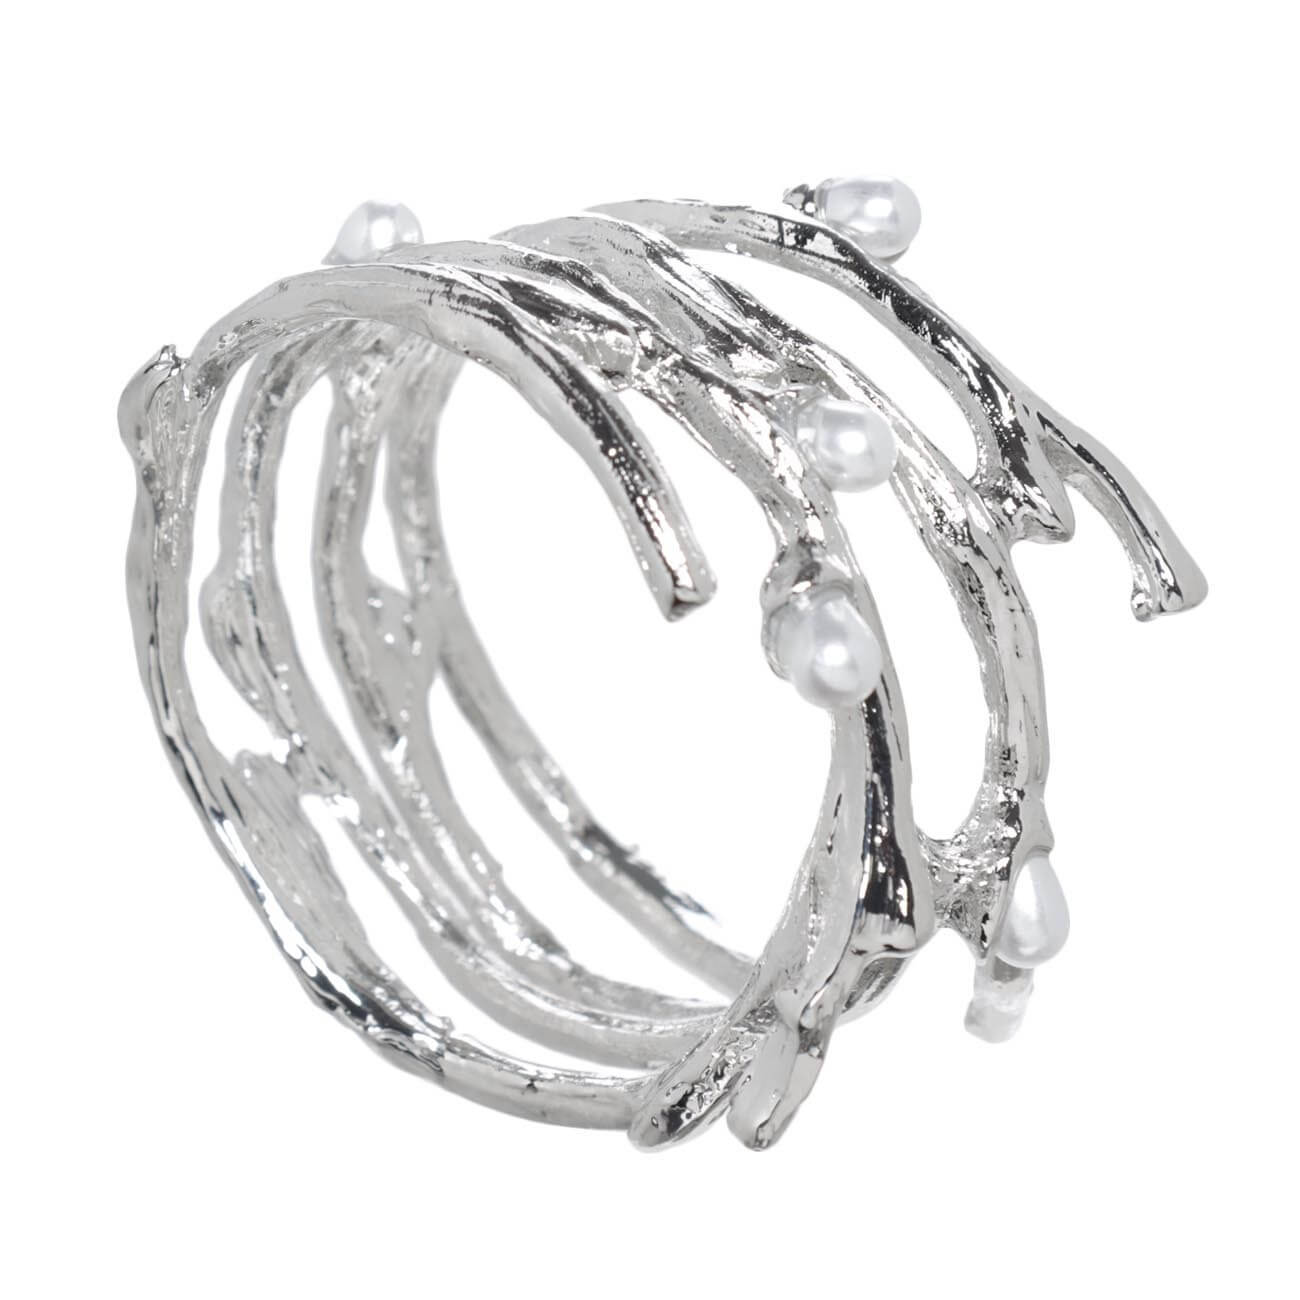 kuchenland кольцо для салфеток 5 см 2 шт металл серебристое кольцо fantastic r Кольцо для салфеток, 4 см, металл/пластик, серебристое, Жемчужины, Pearl